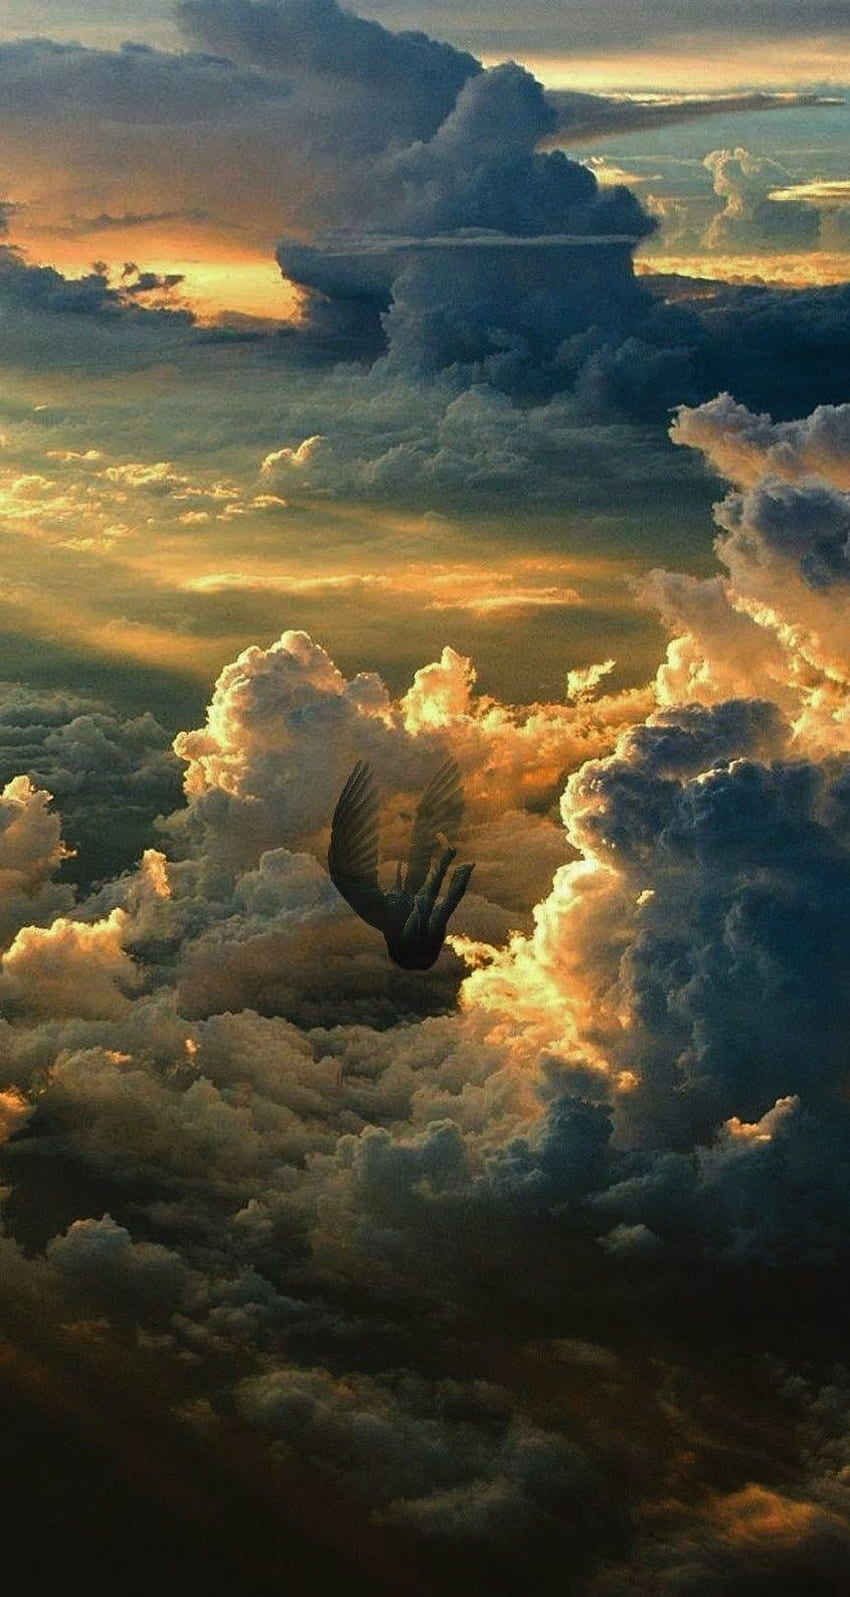 Malaikat yang terjatuh. iPhone awan, estetika Langit, Matahari Terbenam, Langit Jatuh wallpaper ponsel HD